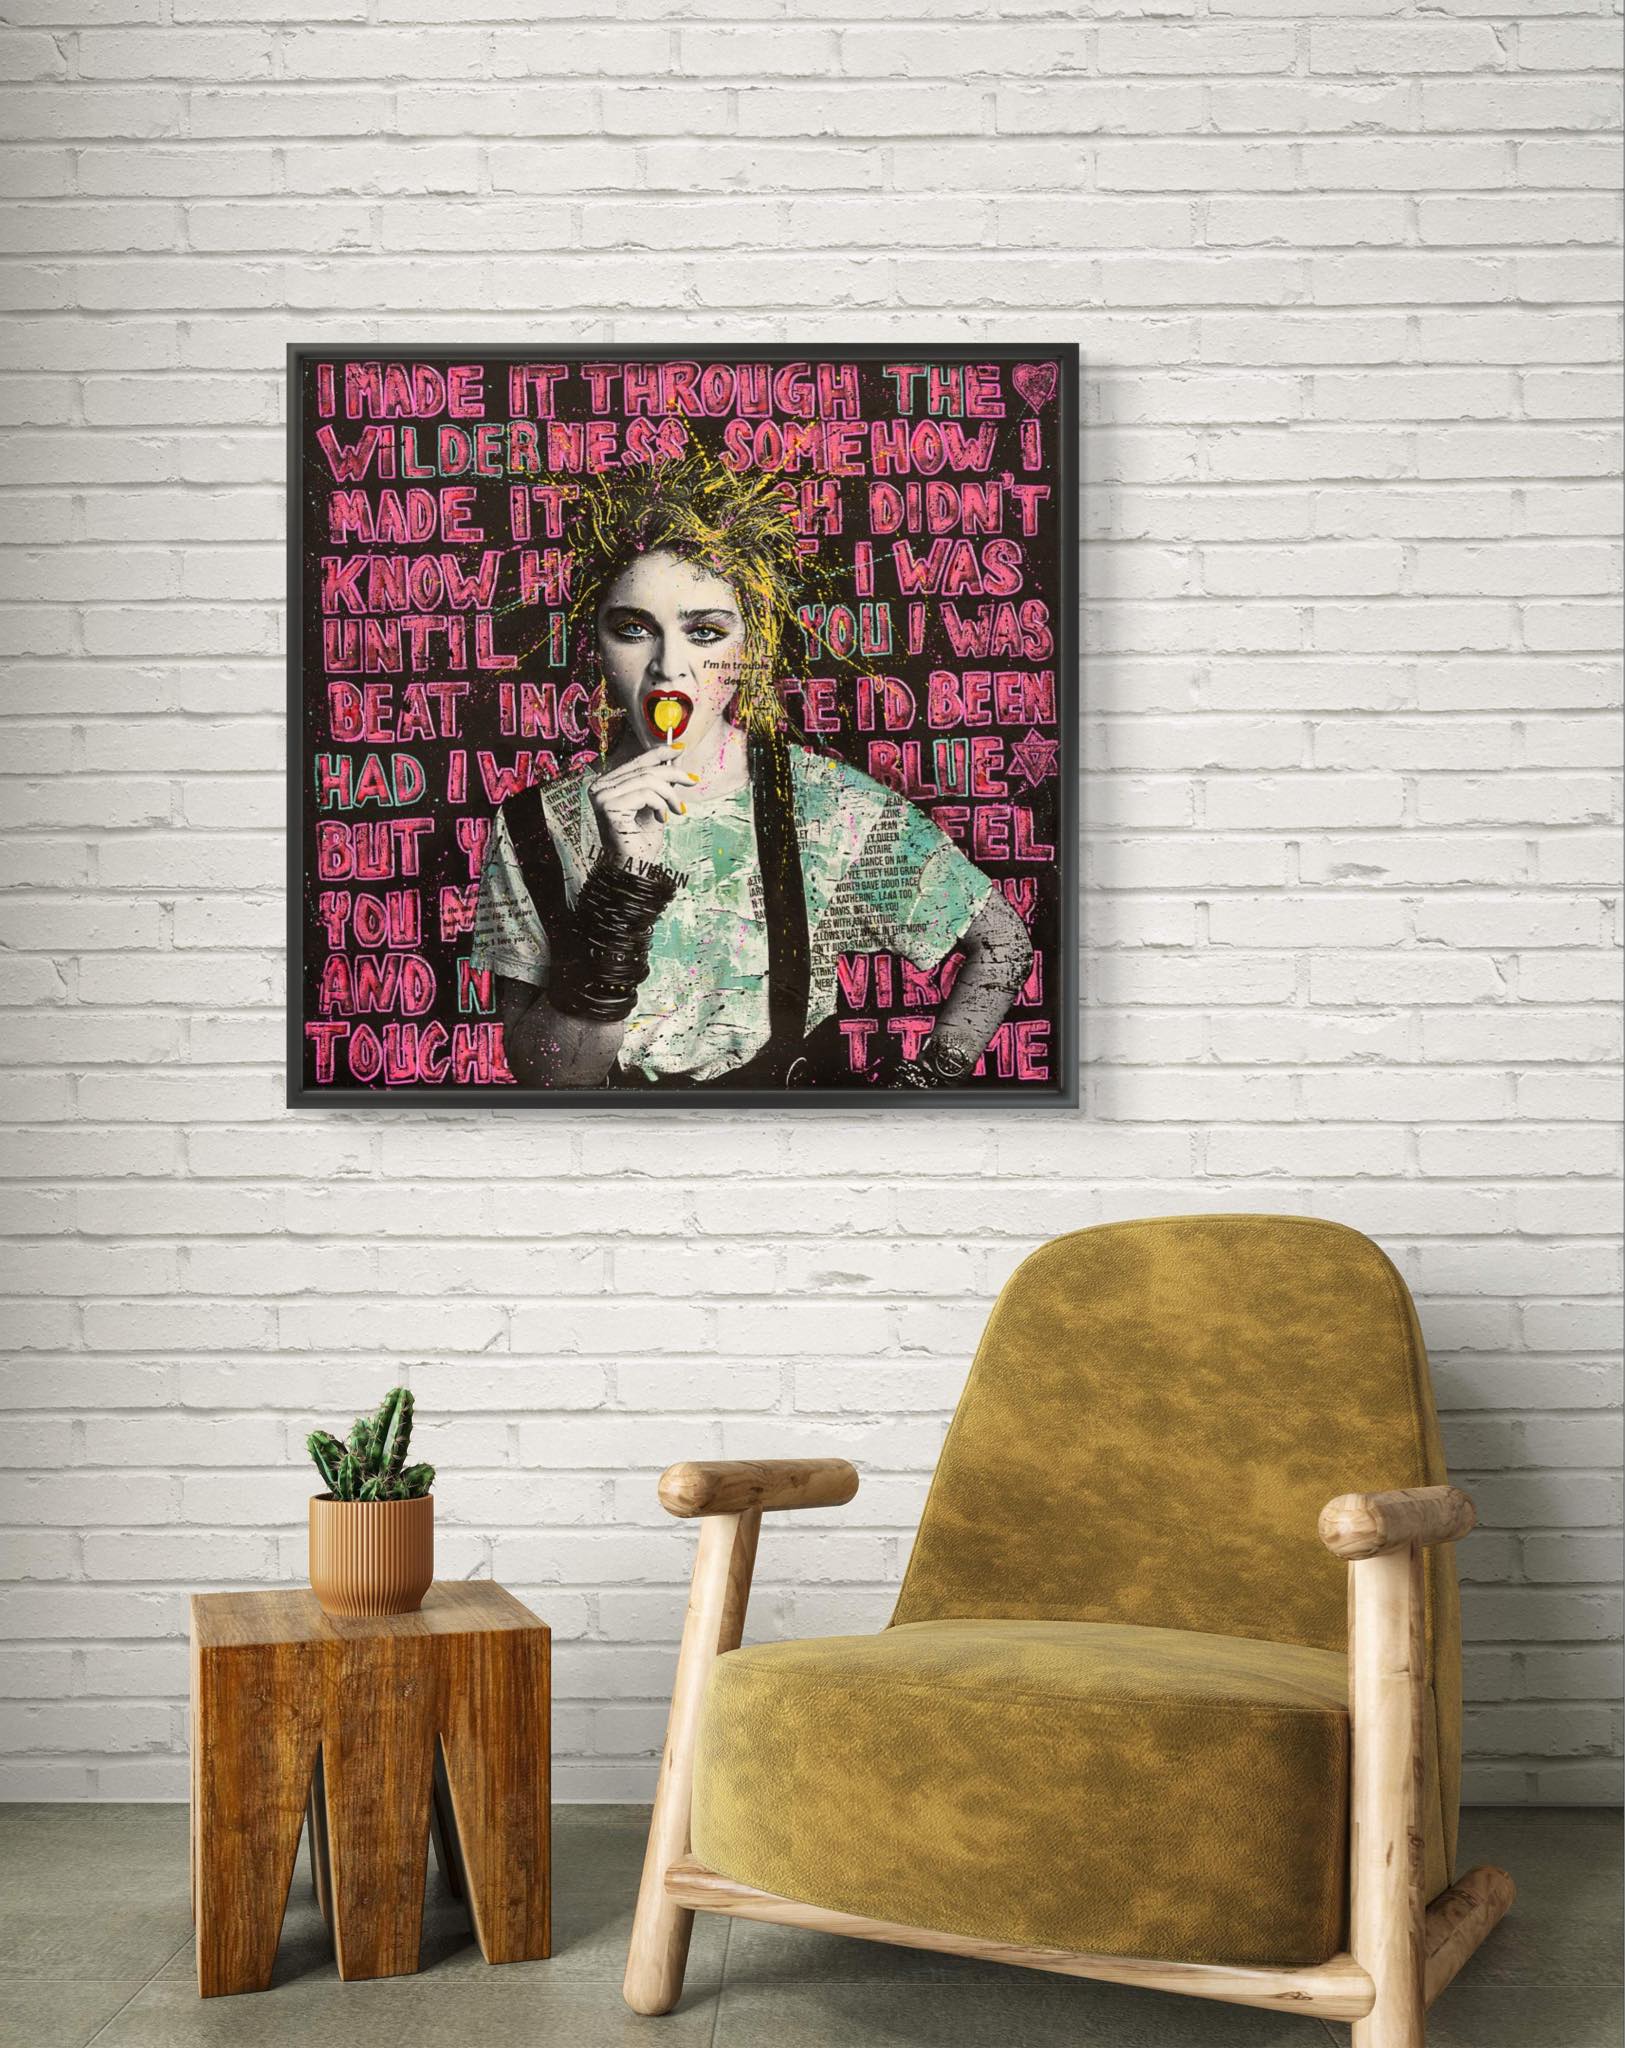 Madonna i pop art stil. Fru Bugge er kjent for sin fargerike kunst i pop art og streetart stil. Perfekt gave til konfirmanten eller bryllupsparet